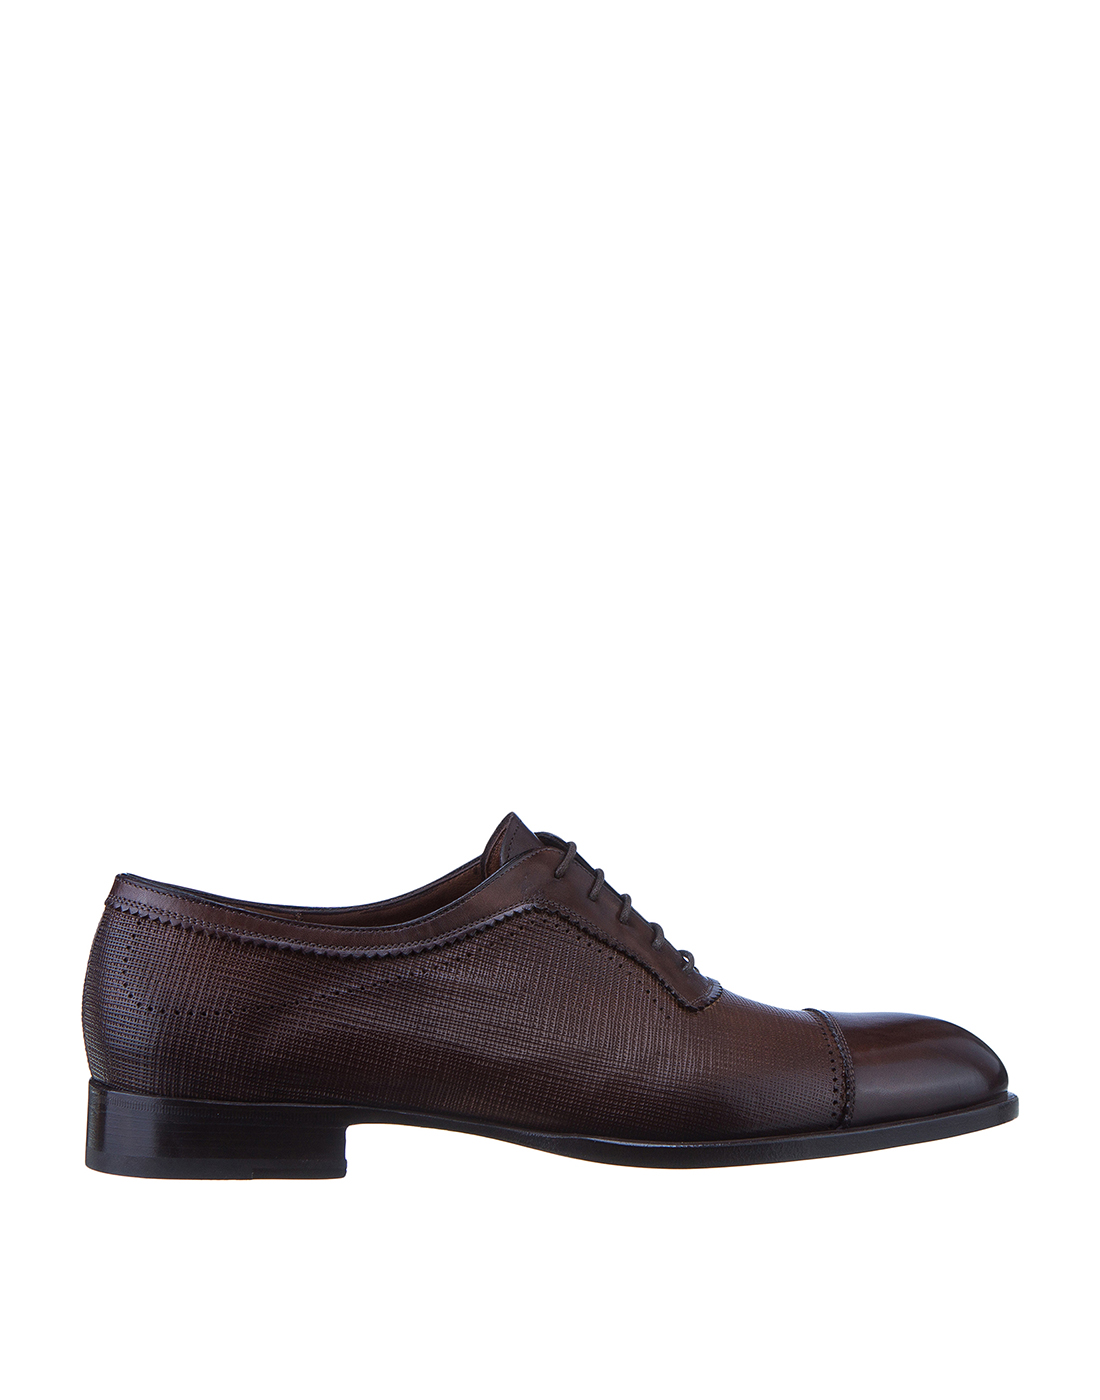 Туфли коричневые мужские Fratelli Rossetti S12954-1